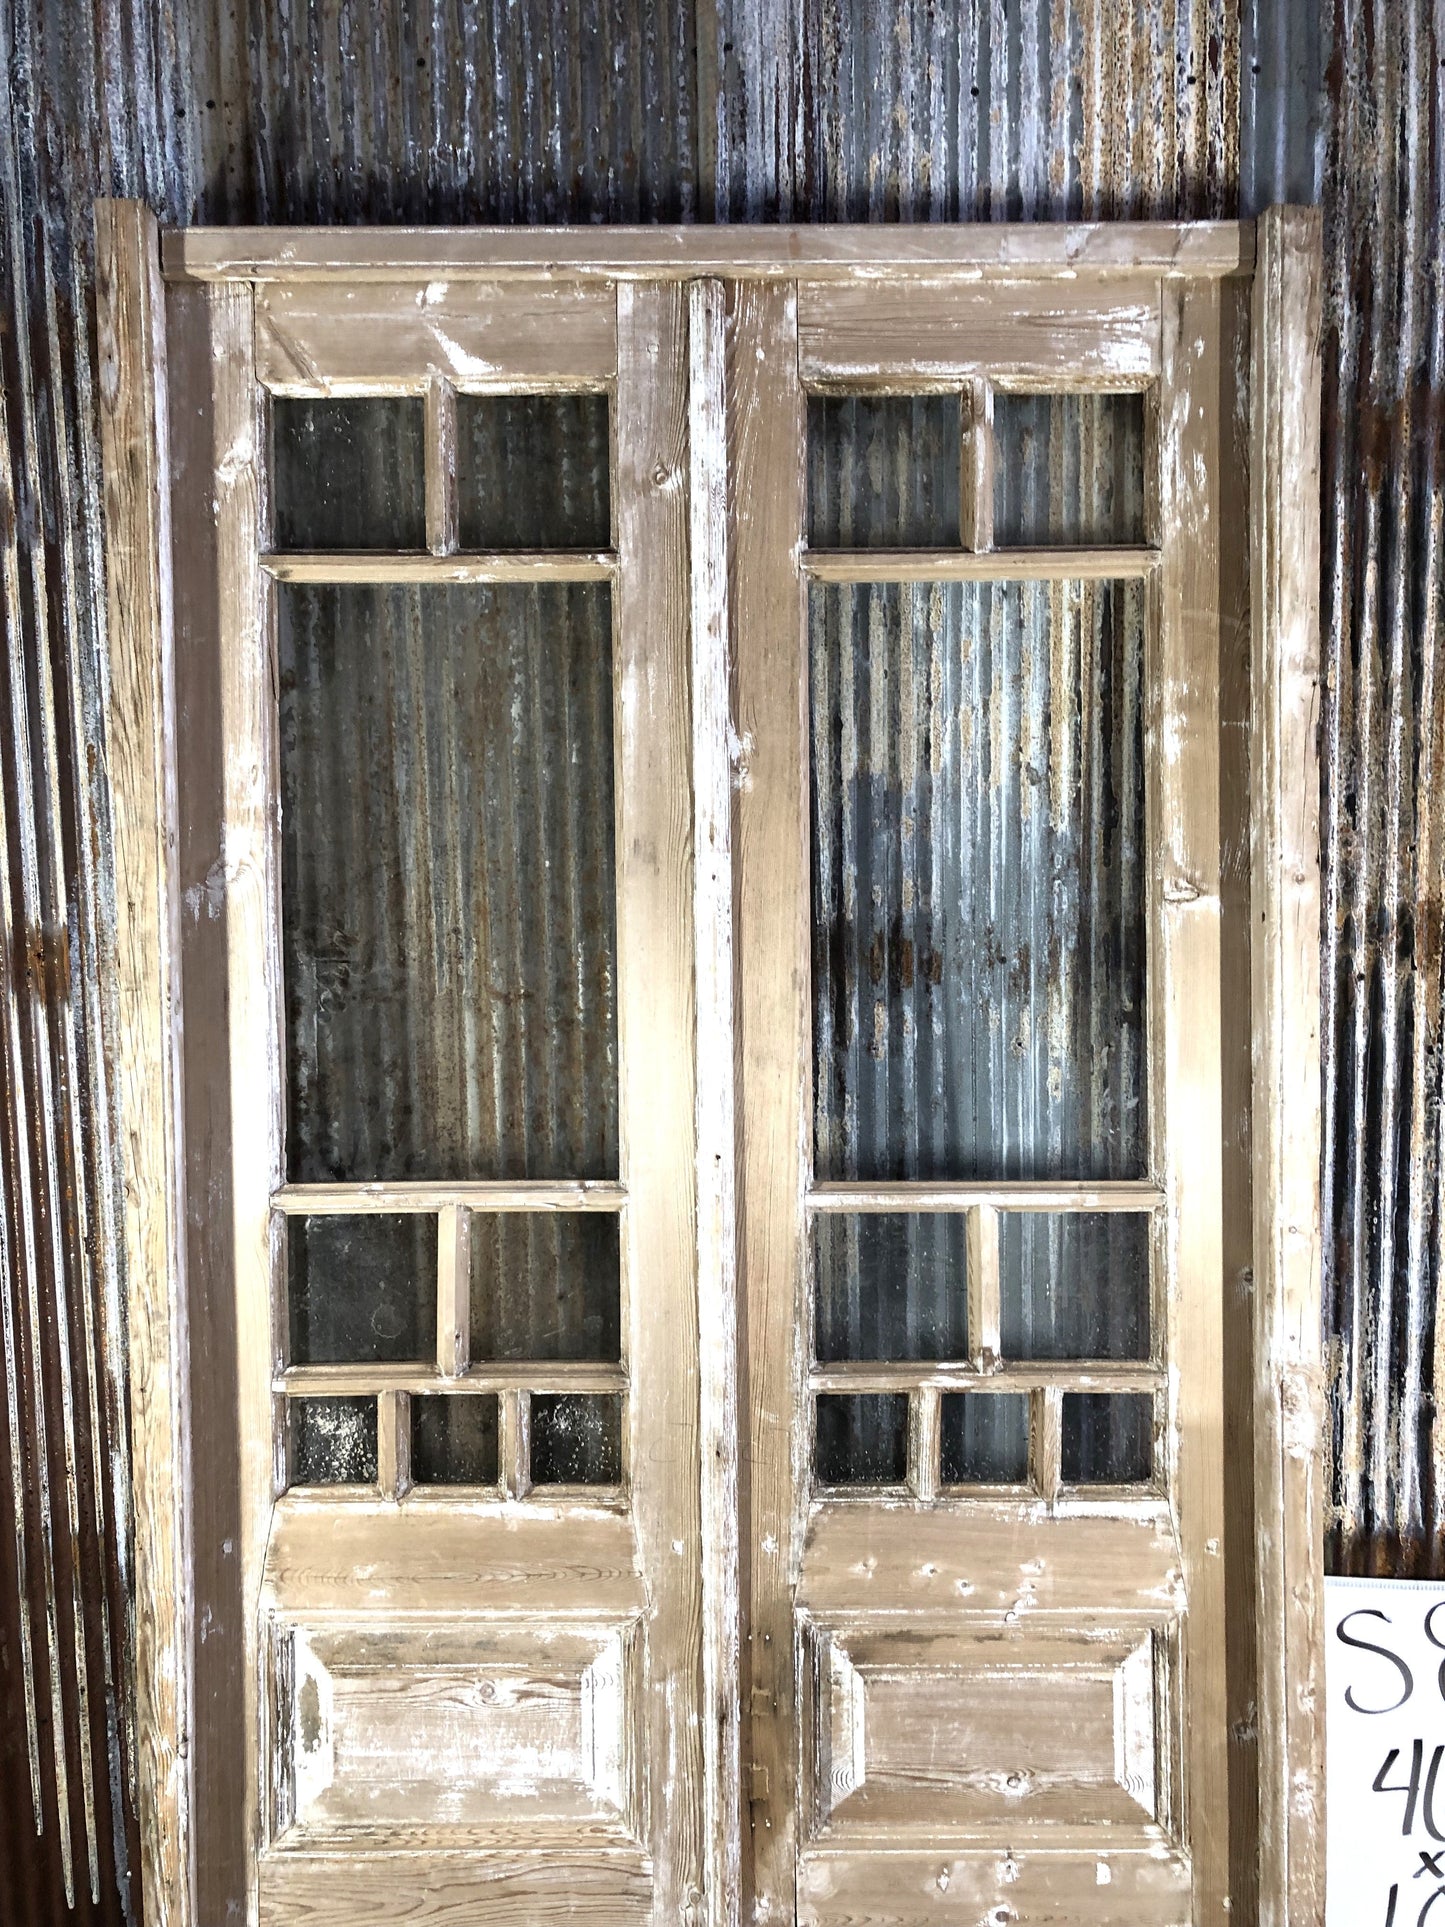 Antique Encased French Double Doors (46x103) 8 Pane Glass European Doors Jamb S8